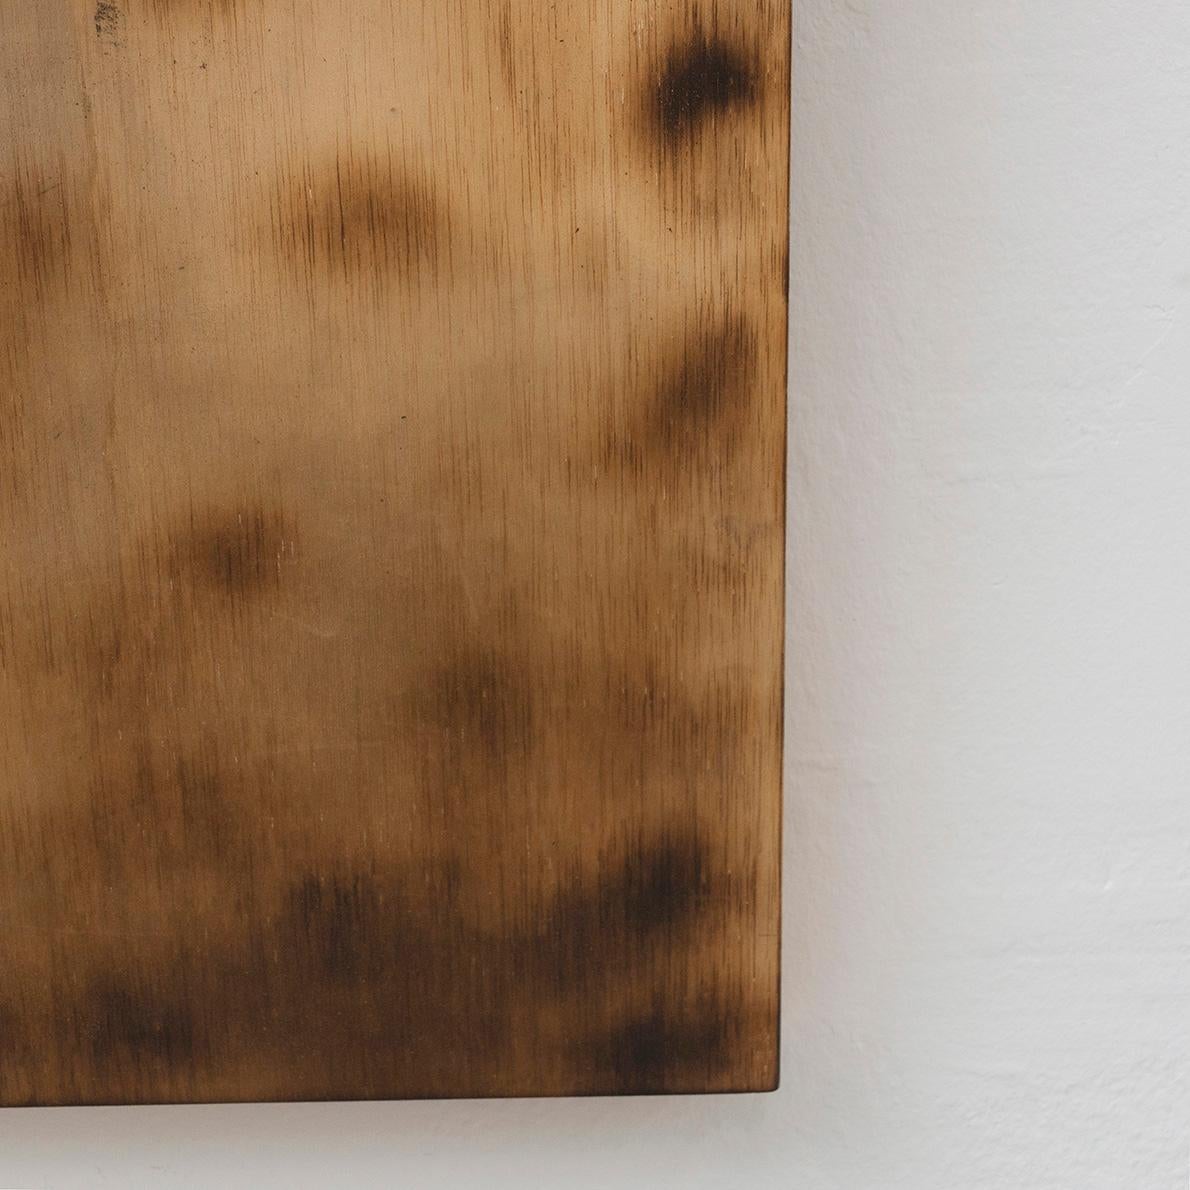 Ramon dels Horts Contemporary Artwork Burned Wood, circa 2018 For Sale 2